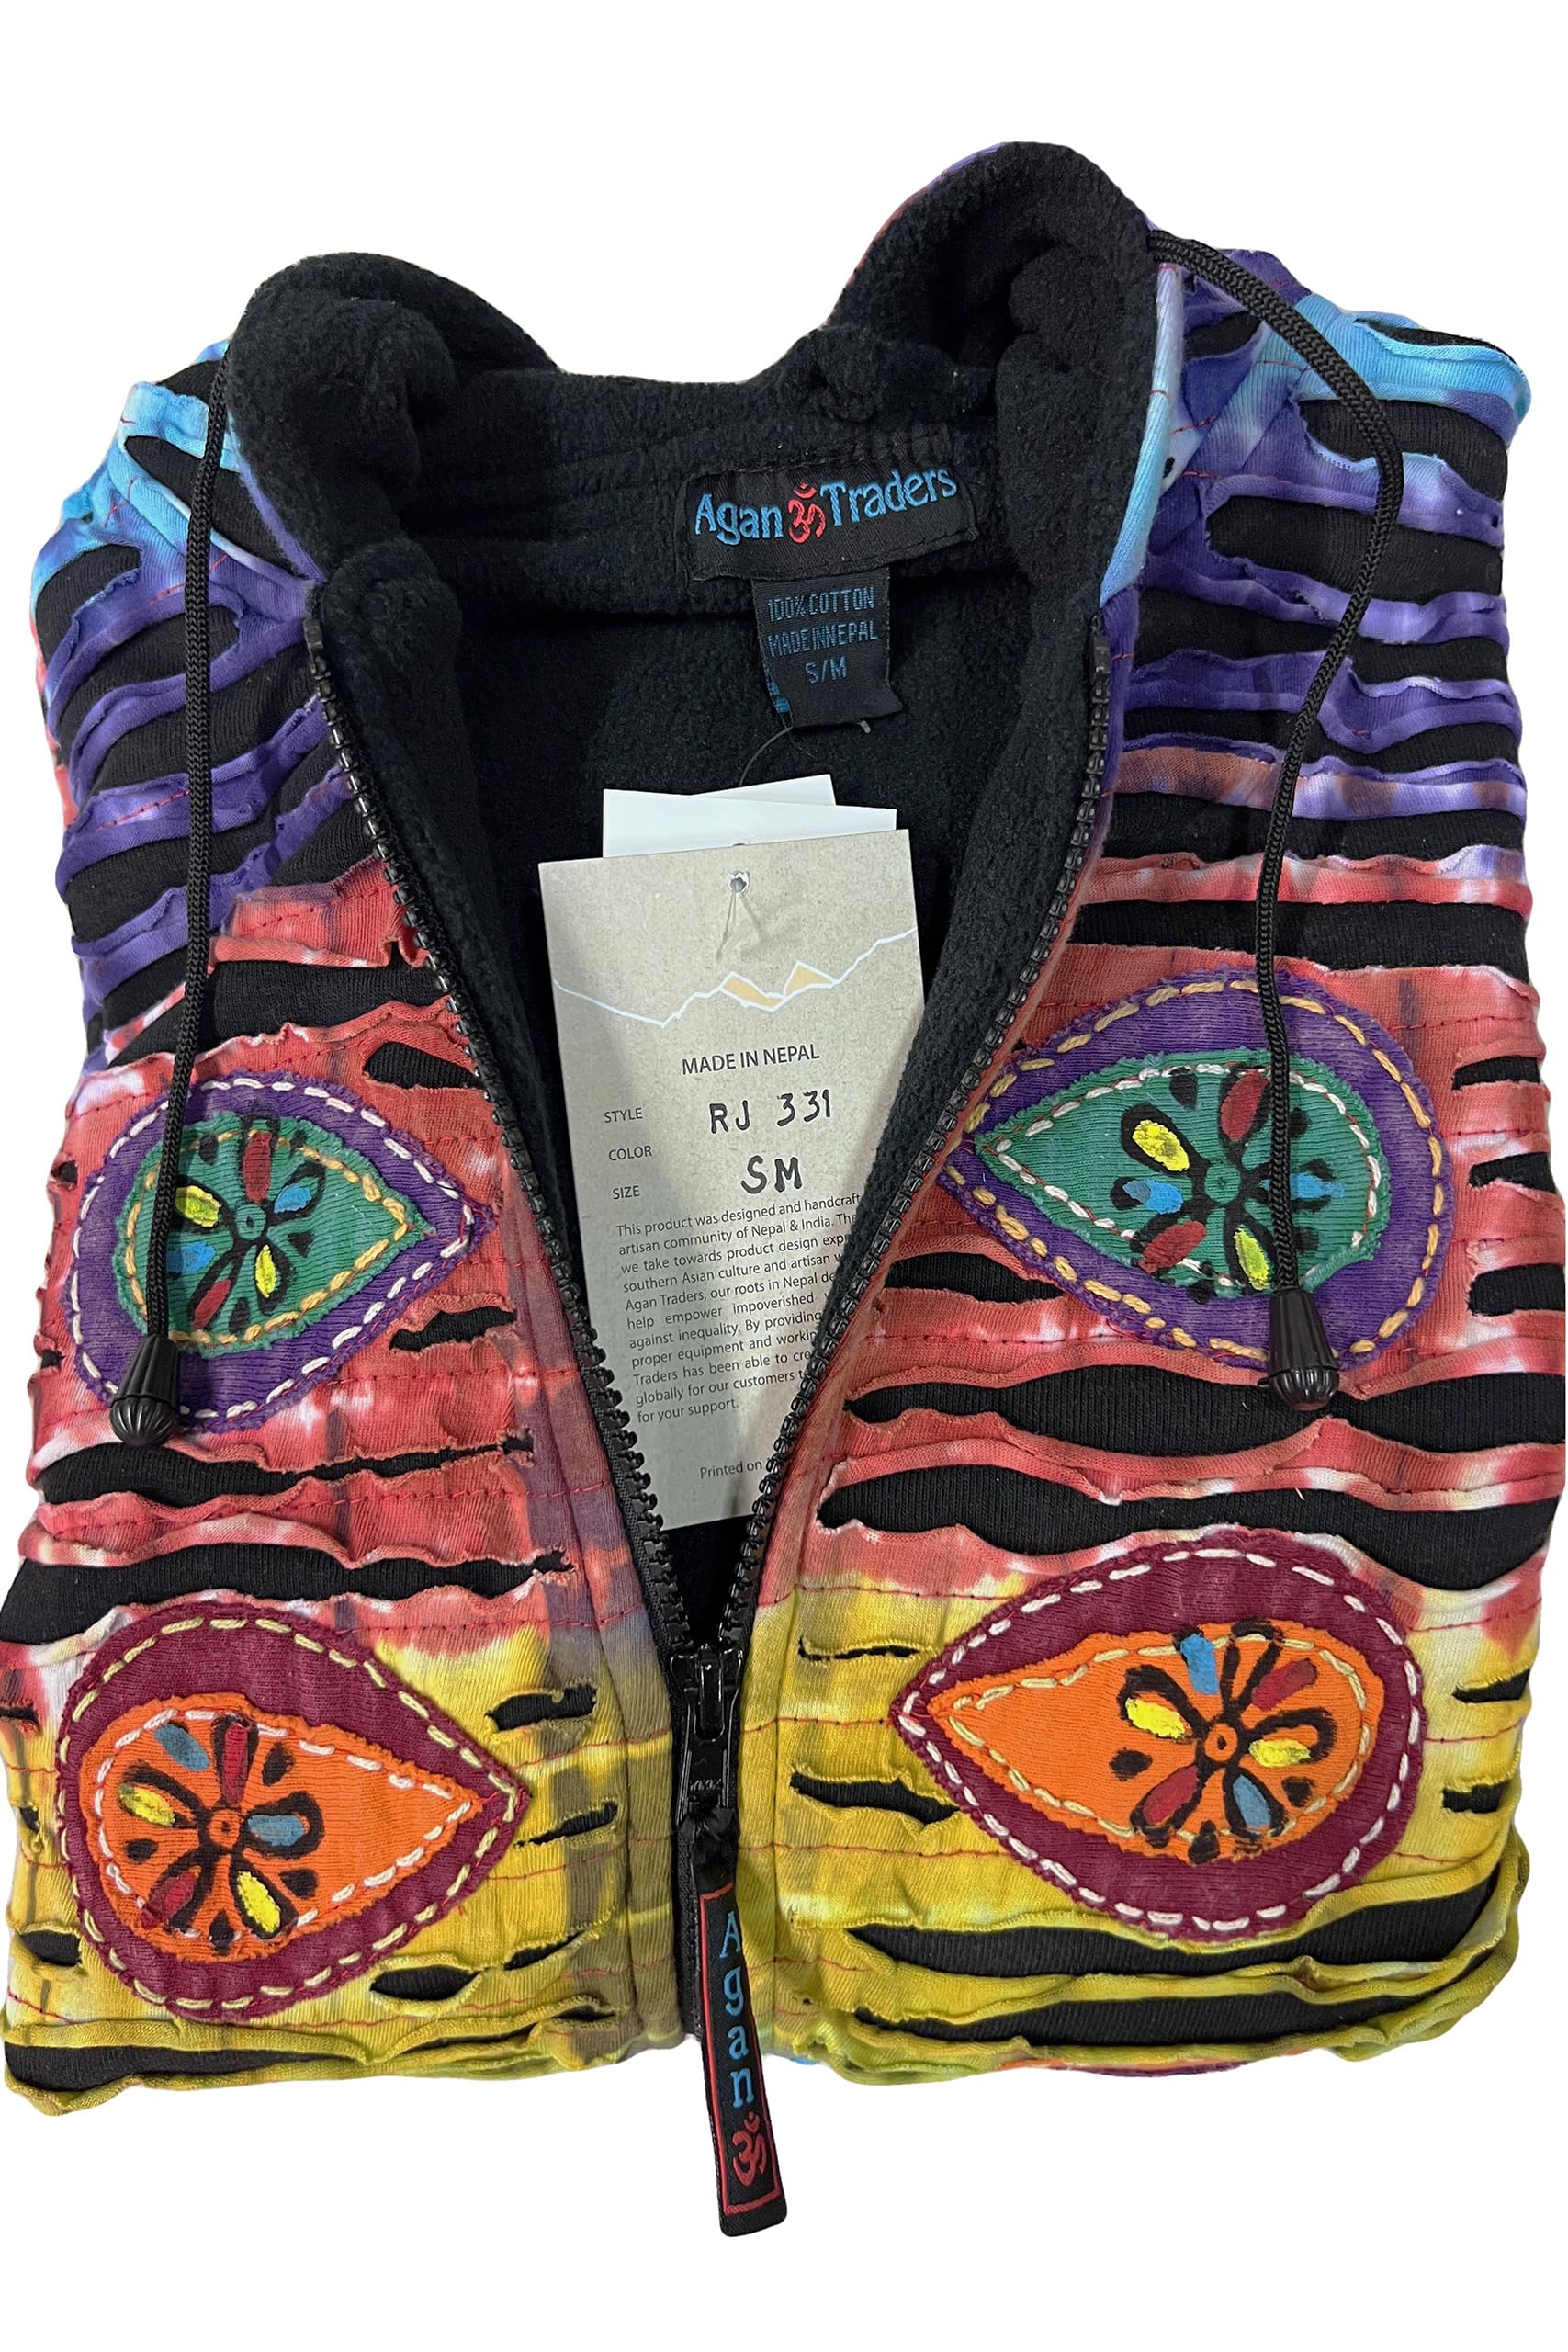 Agan Traders Women's Bohemian Gypsy Hippie Patchwork Cozy Fleece Insulated Hoodie Jacket Nepal